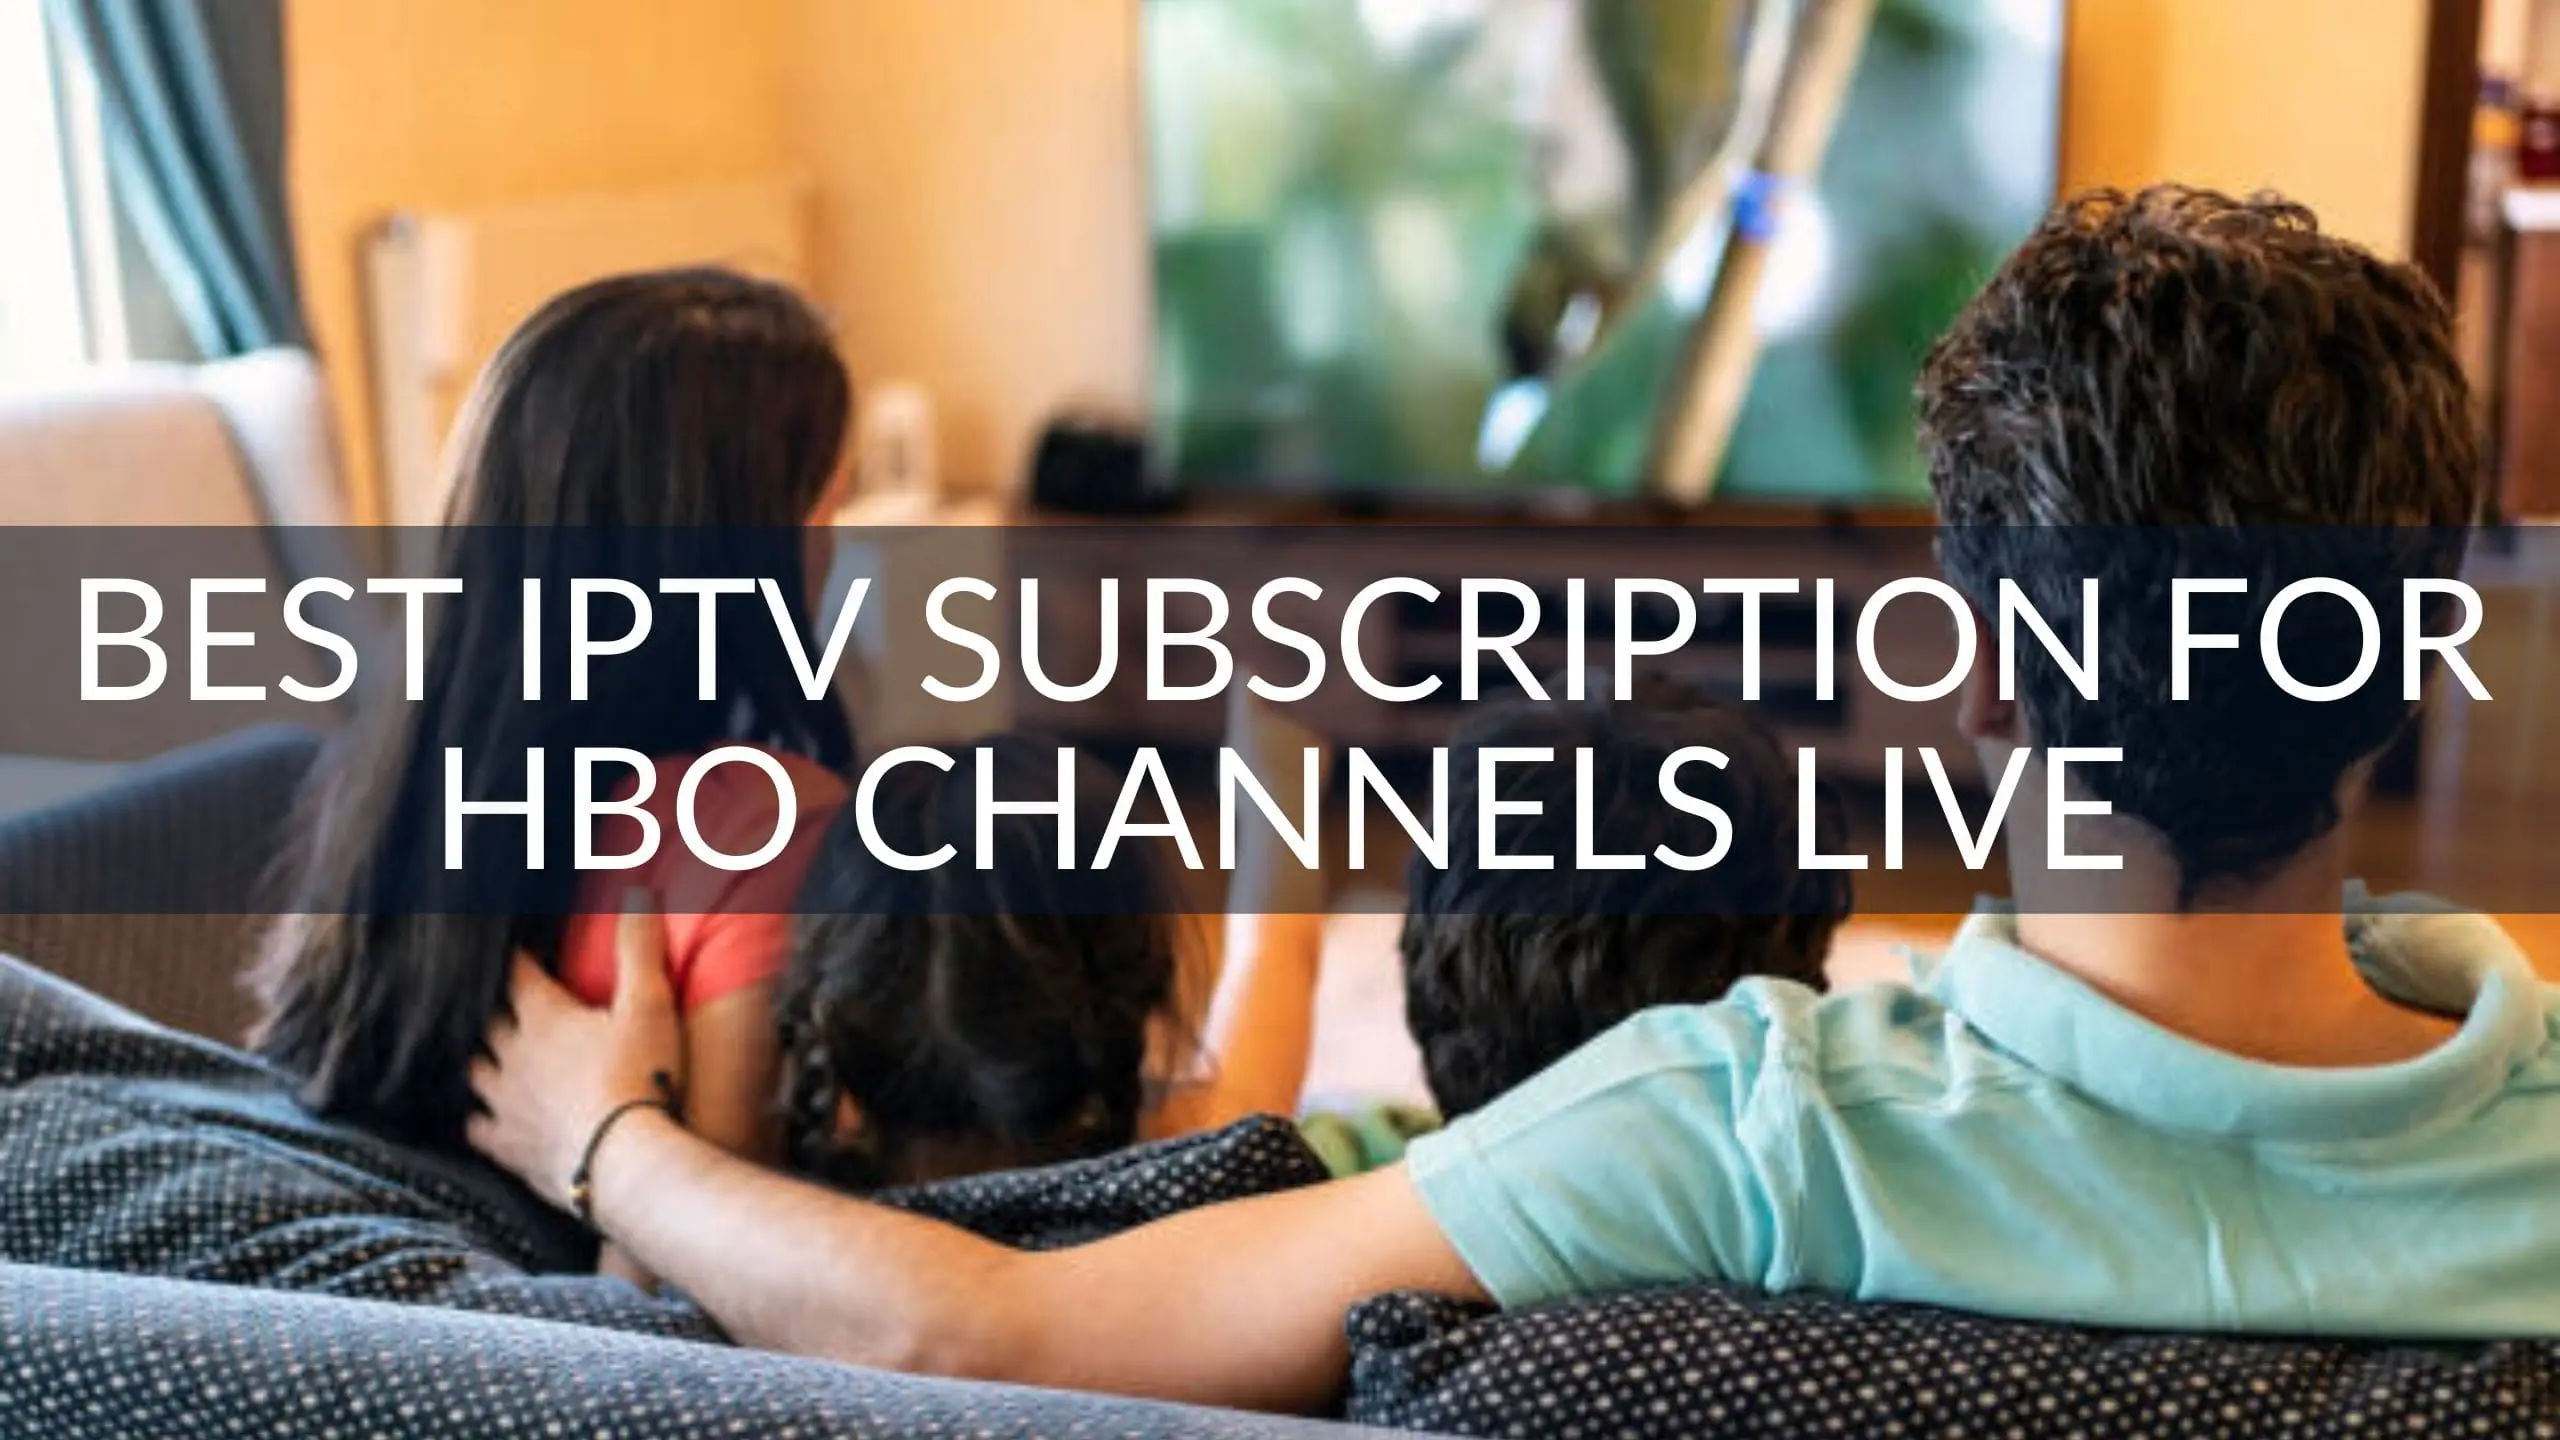 Best IPTV Subscription for HBO Channels Live